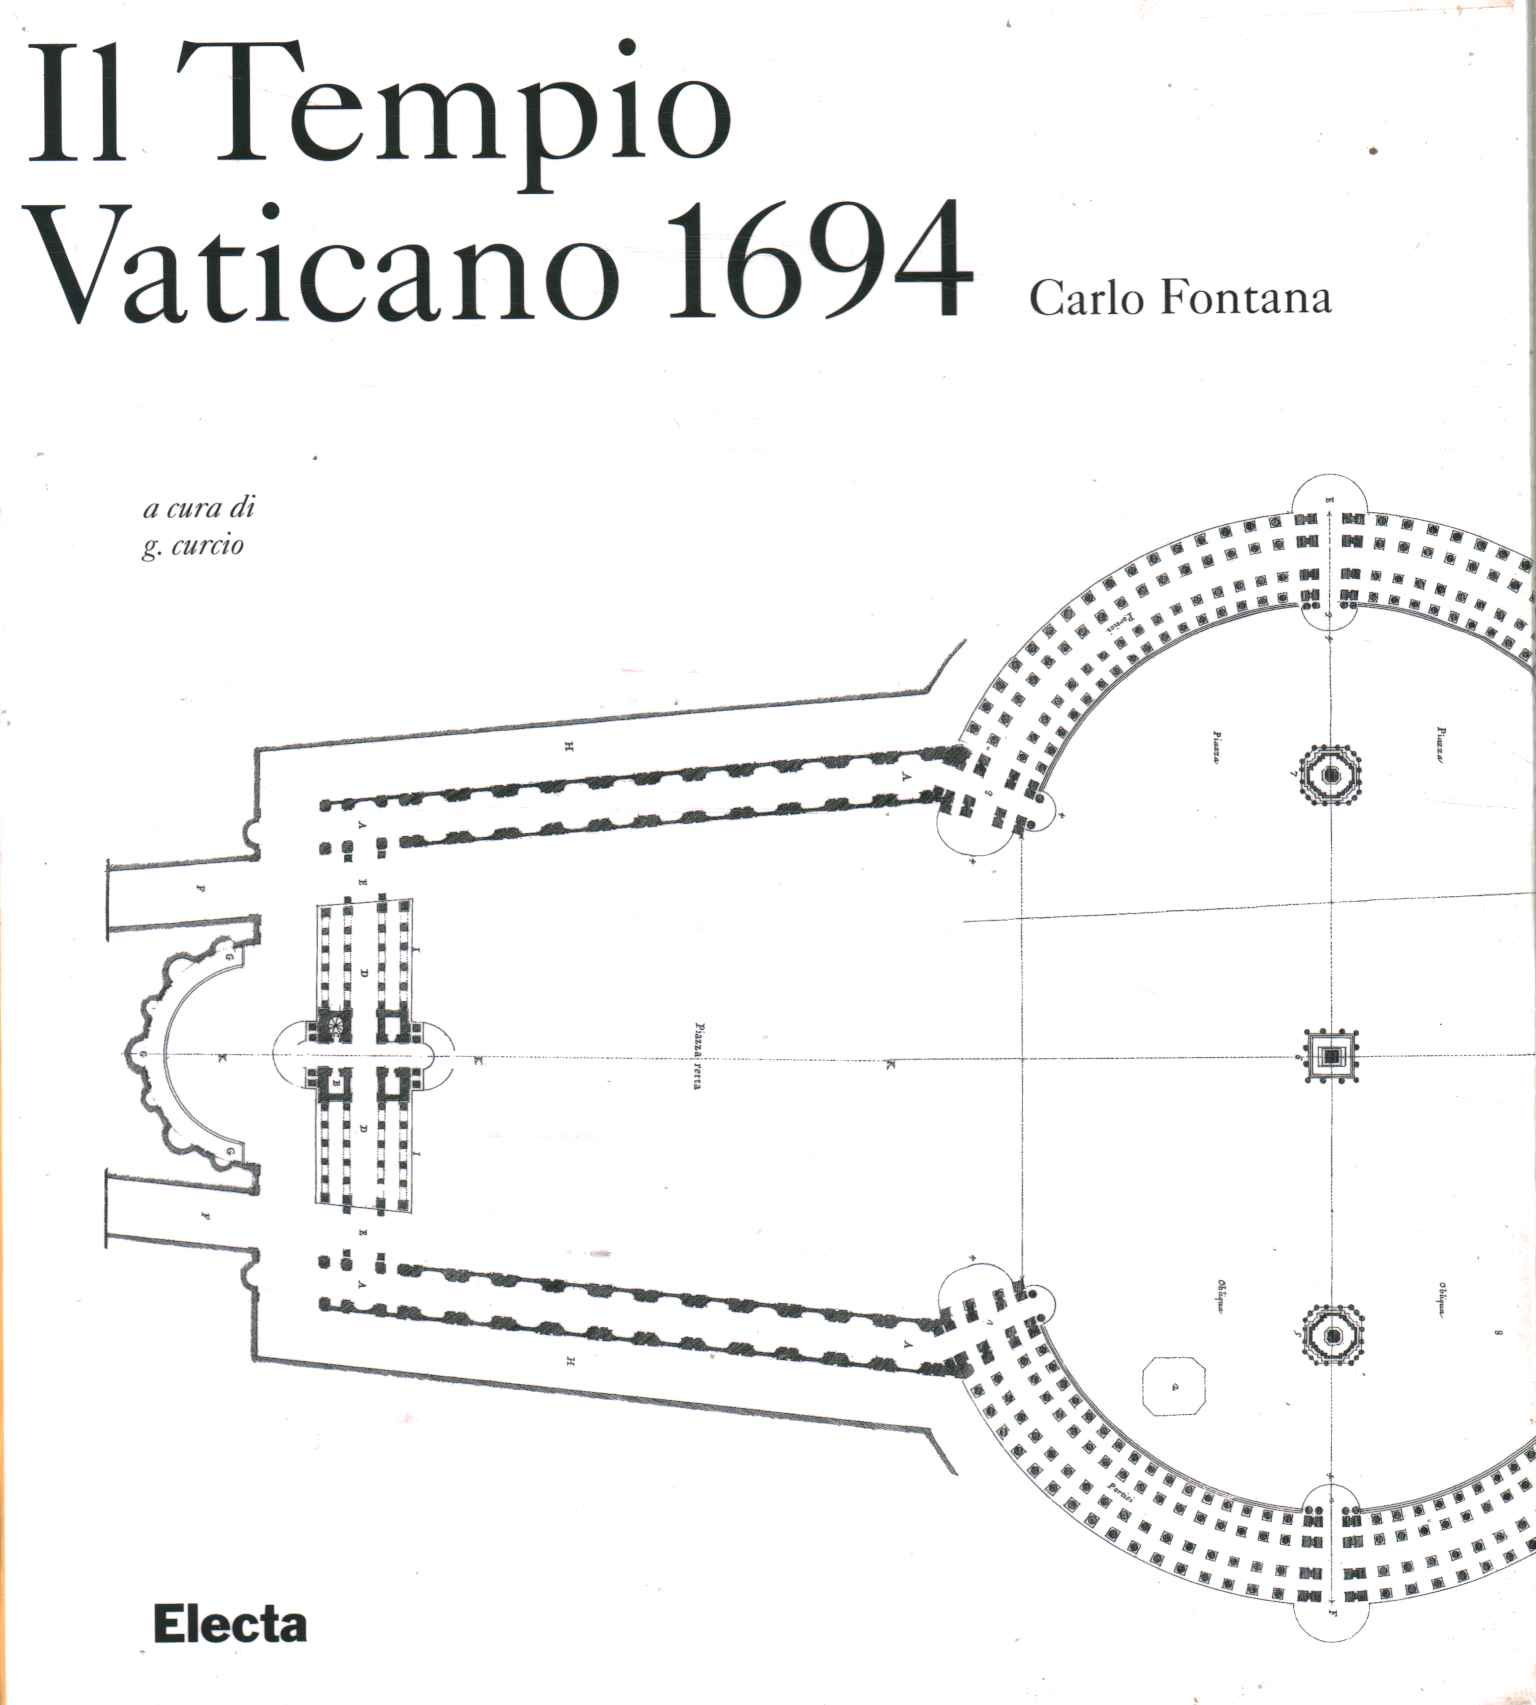 The Vatican Temple 1694